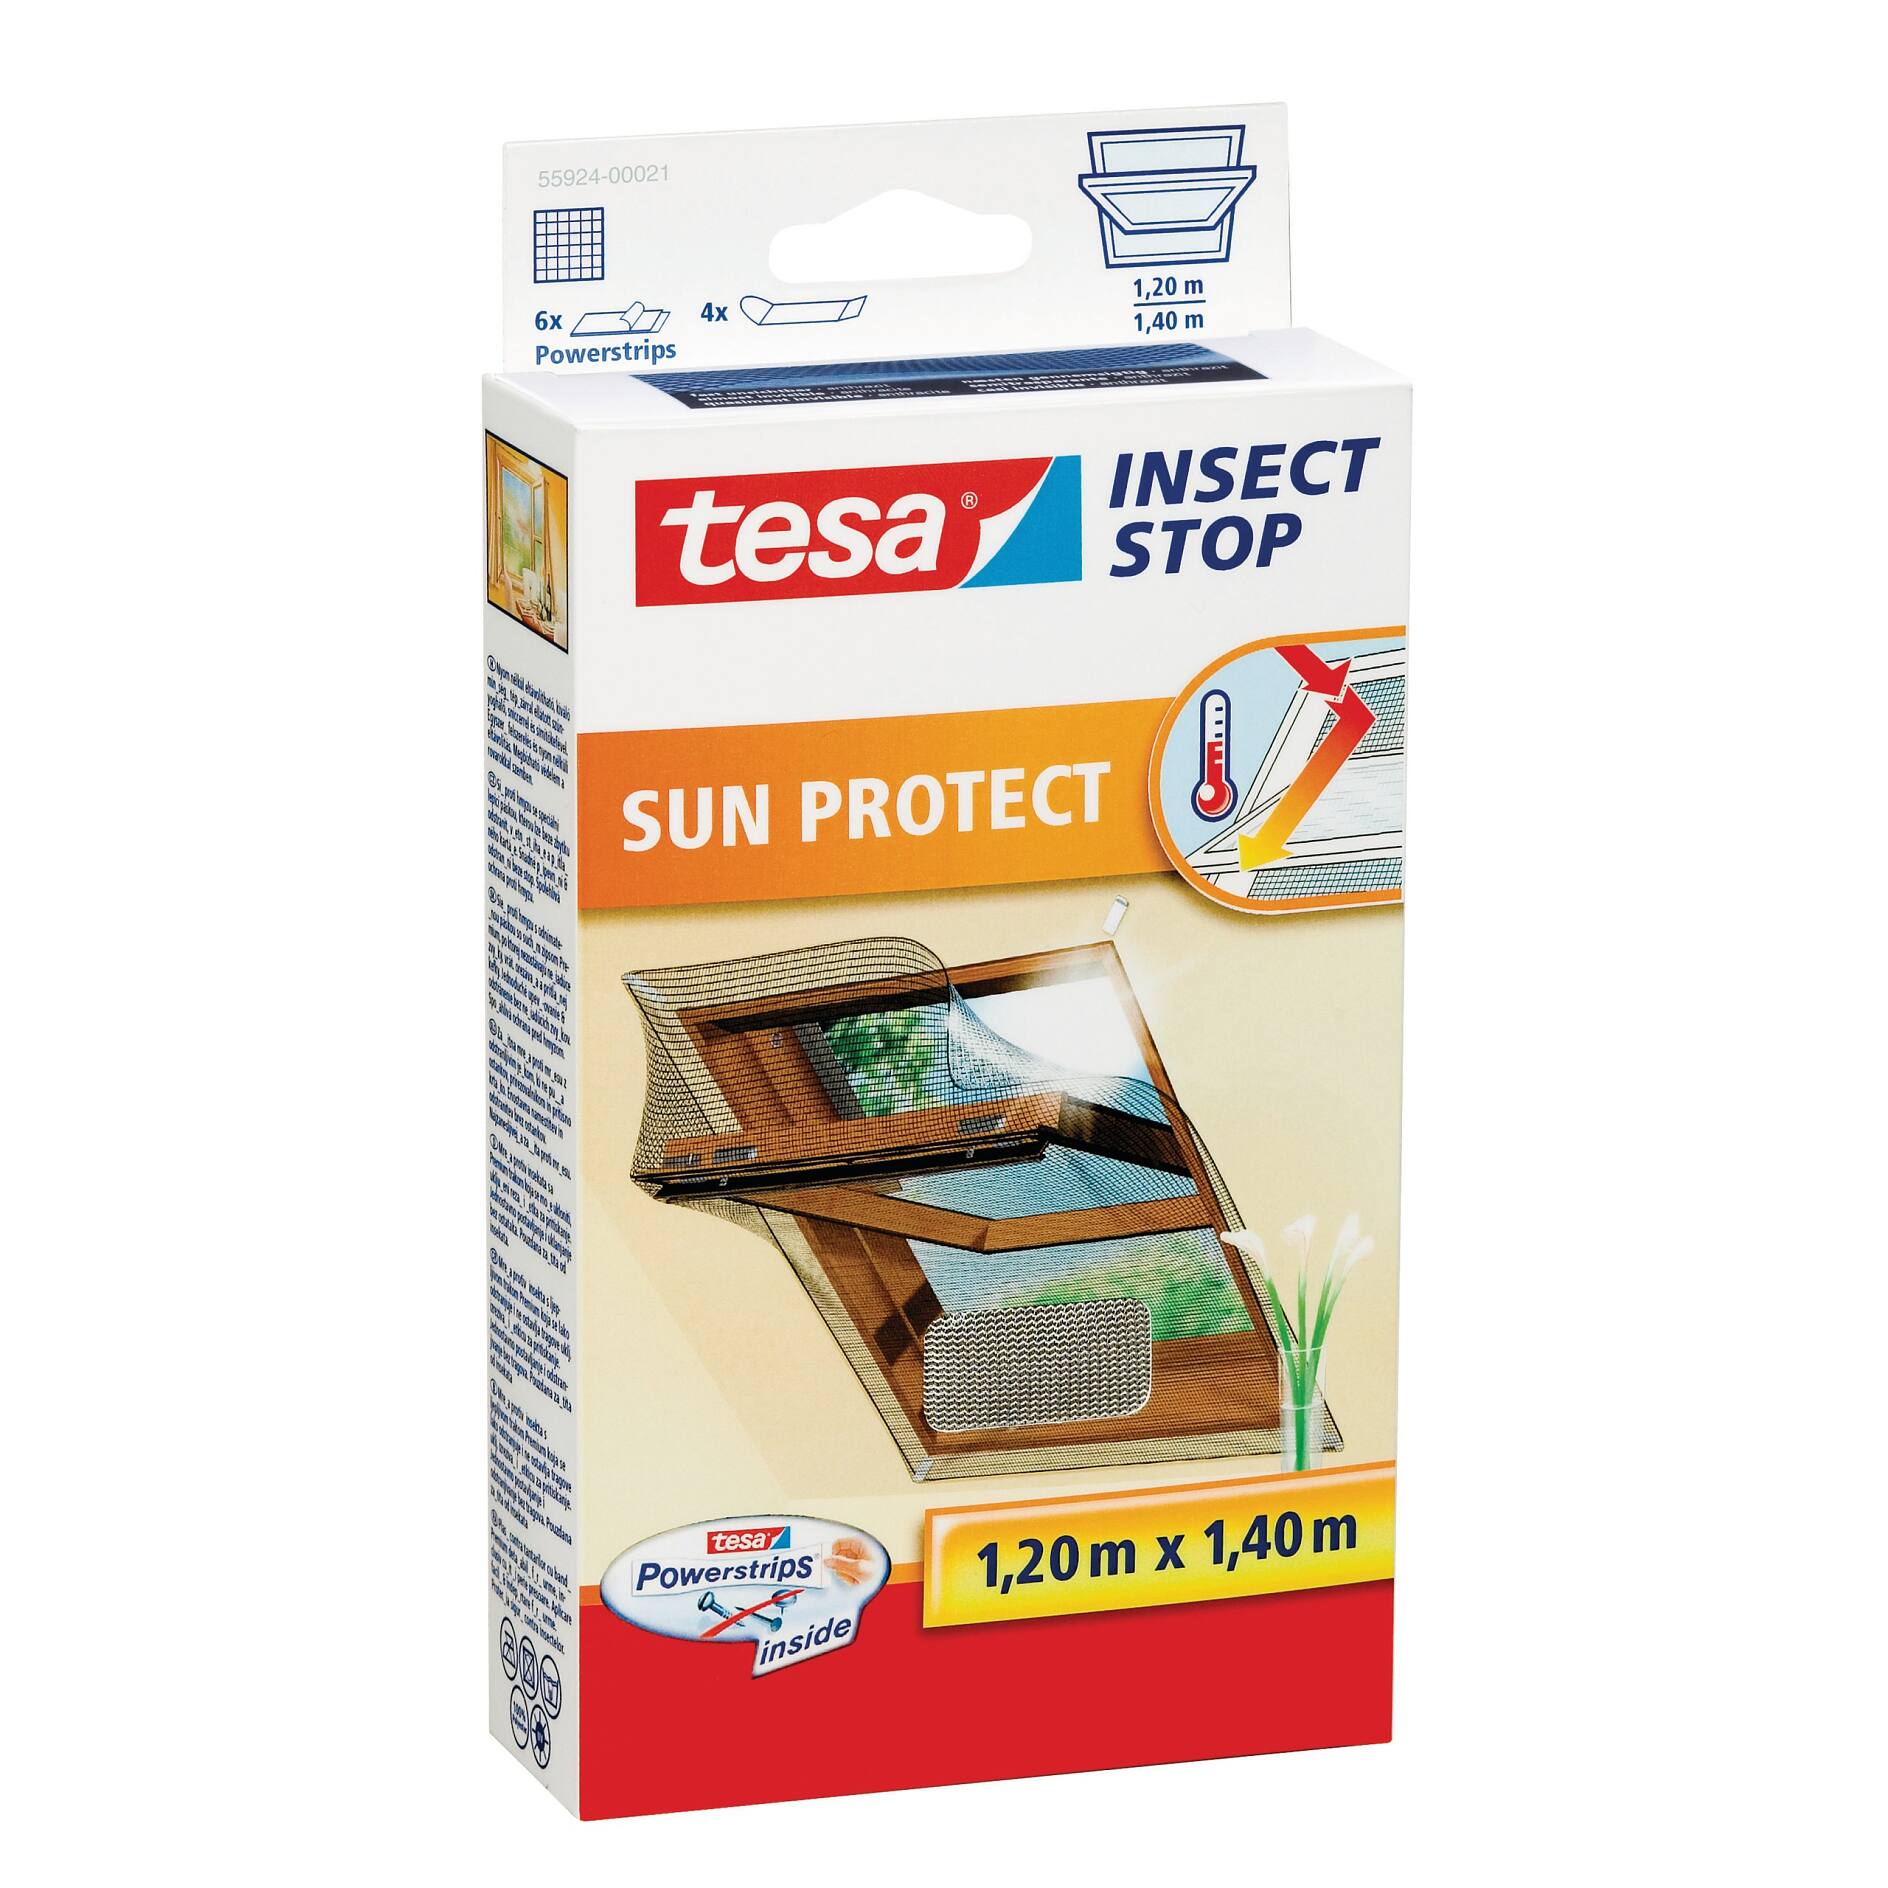 tesa Insect Stop STANDARD Fliegengitter für Fenster im 3er Pack